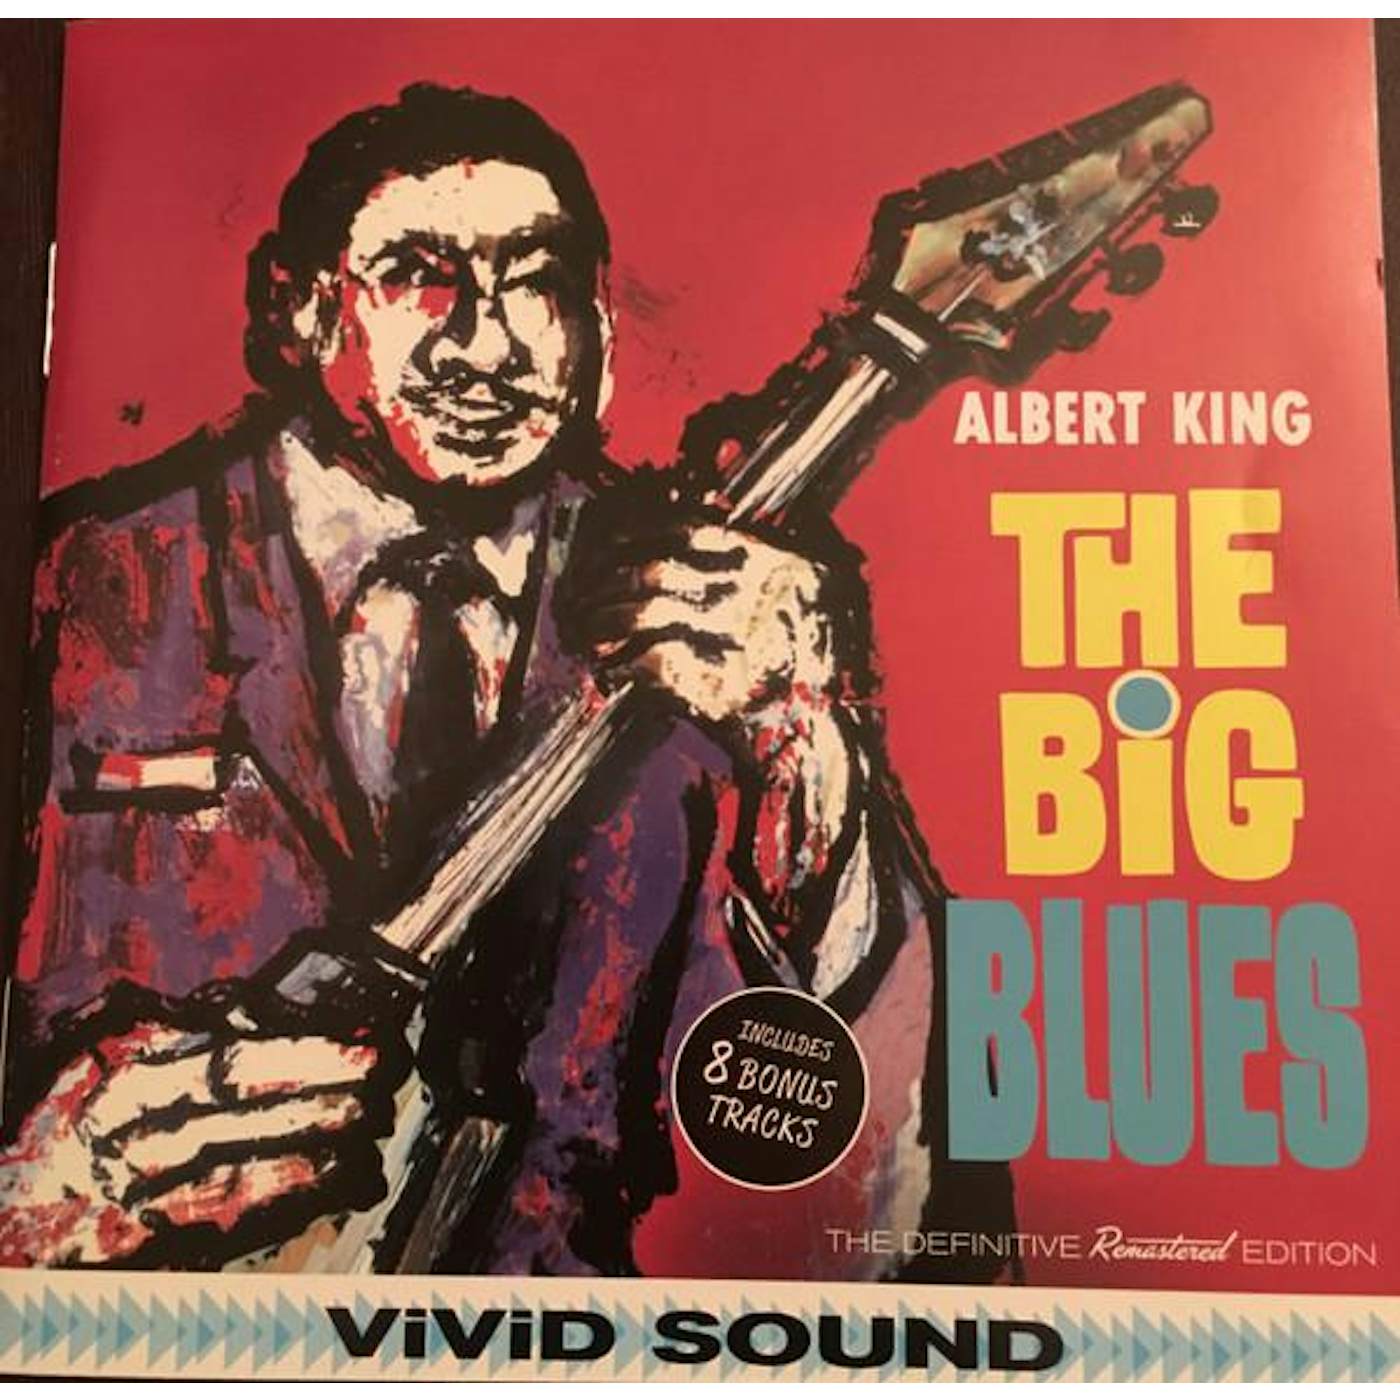 Albert King BIG BLUES (8 BONUS TRACKS) CD